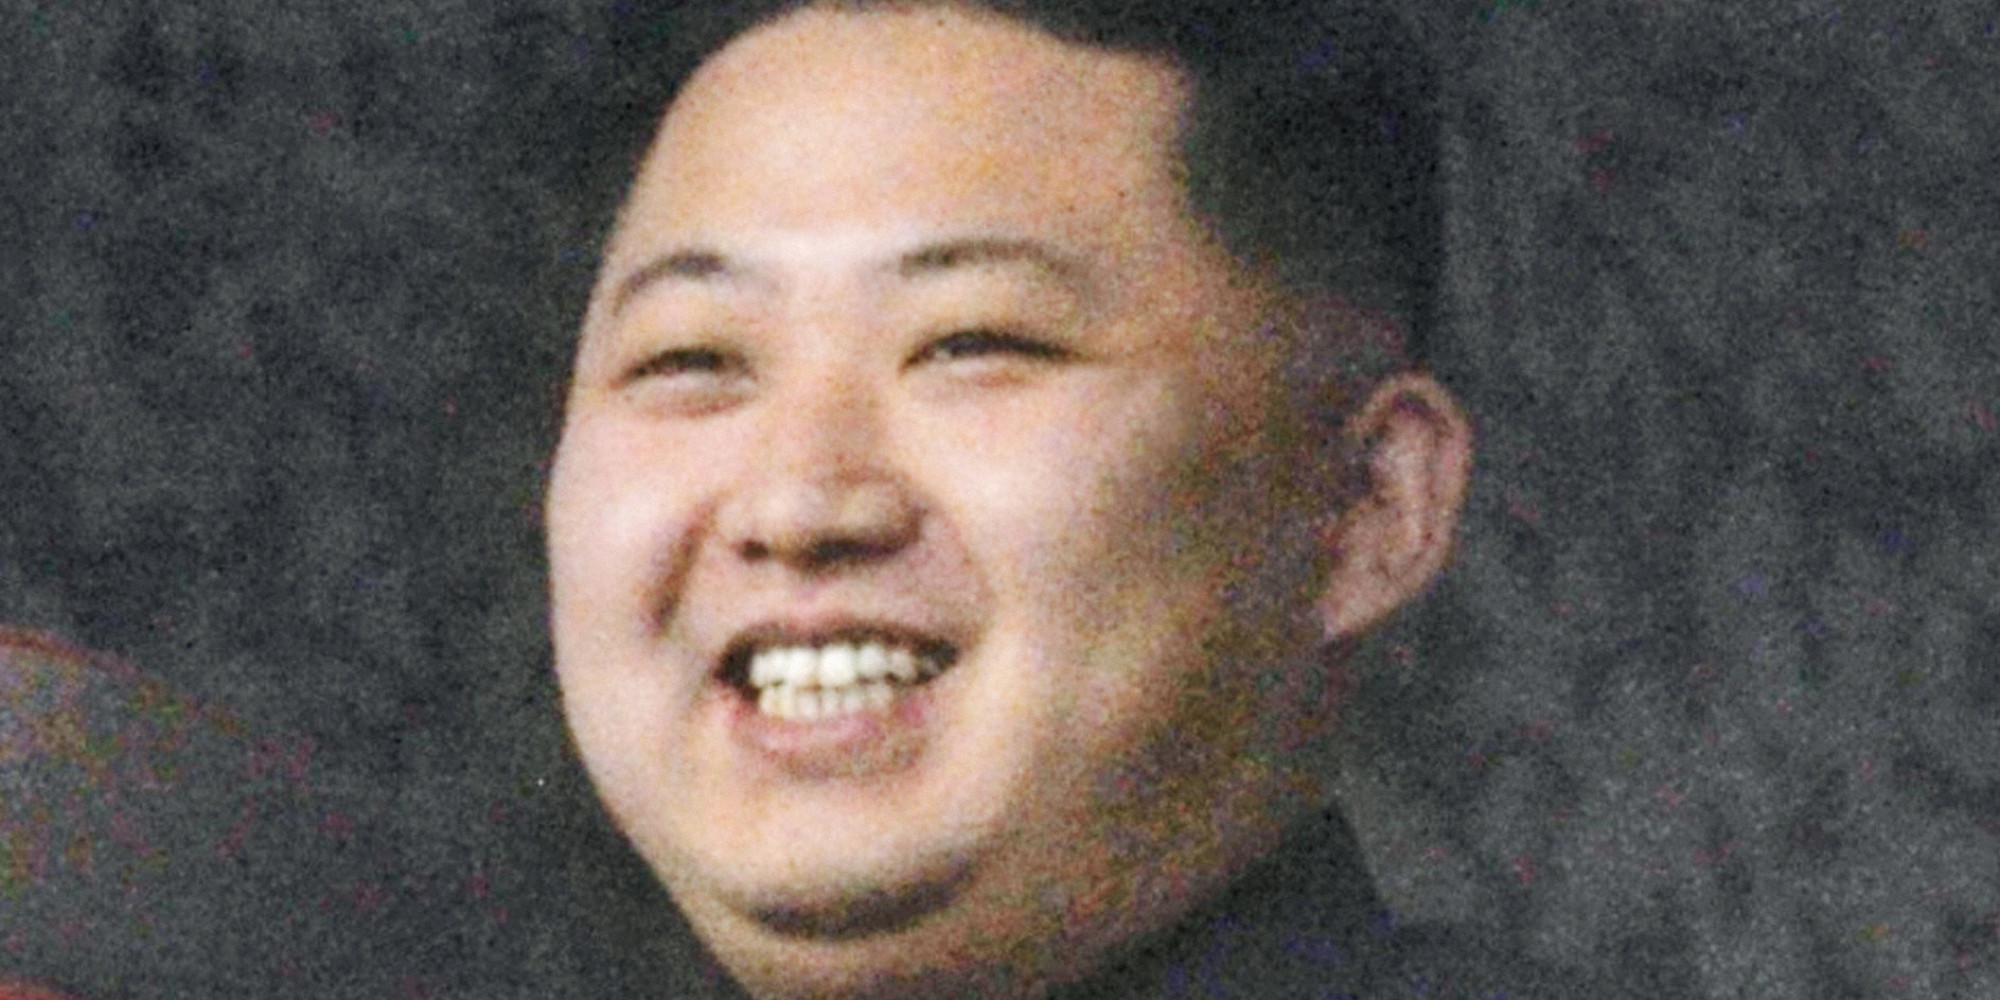 North Koreas Kim Jong Un Reinstates Traditional Female Pleasure Squads To Demonstrate His 